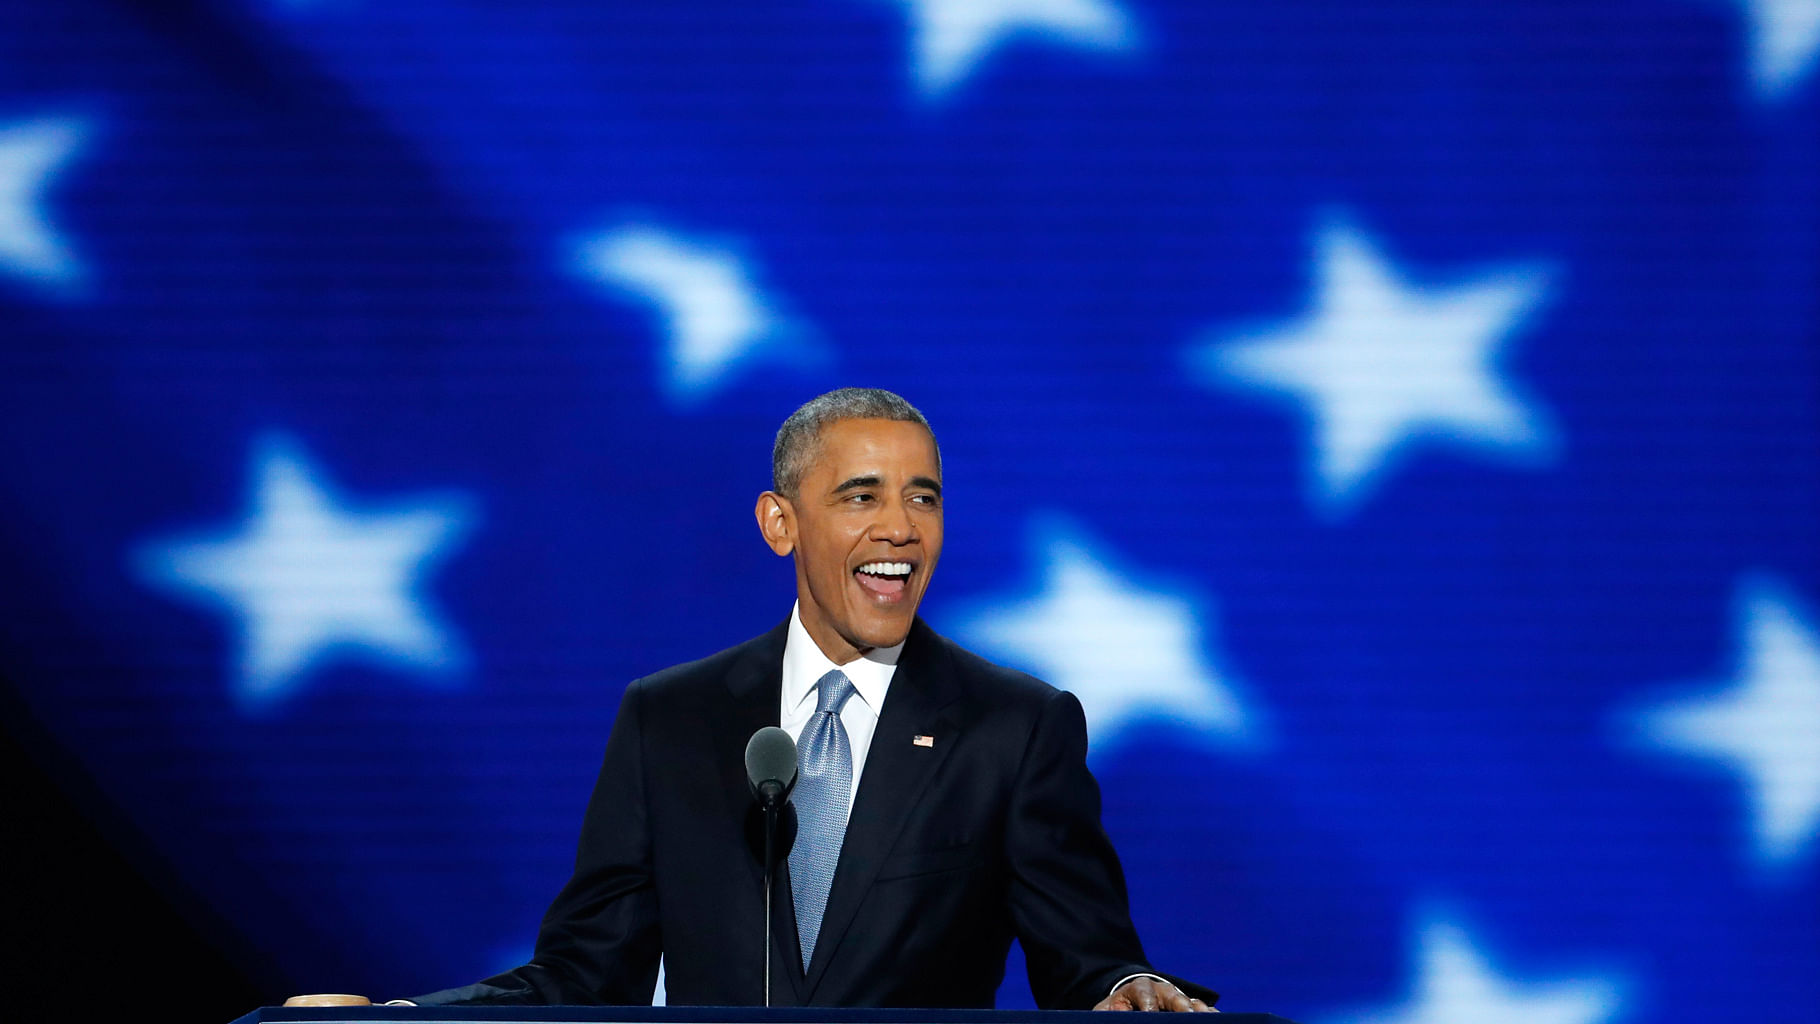 

US President Barack Obama speaking at the Democratic National Convention in Philadelphia. (Photo: AP)